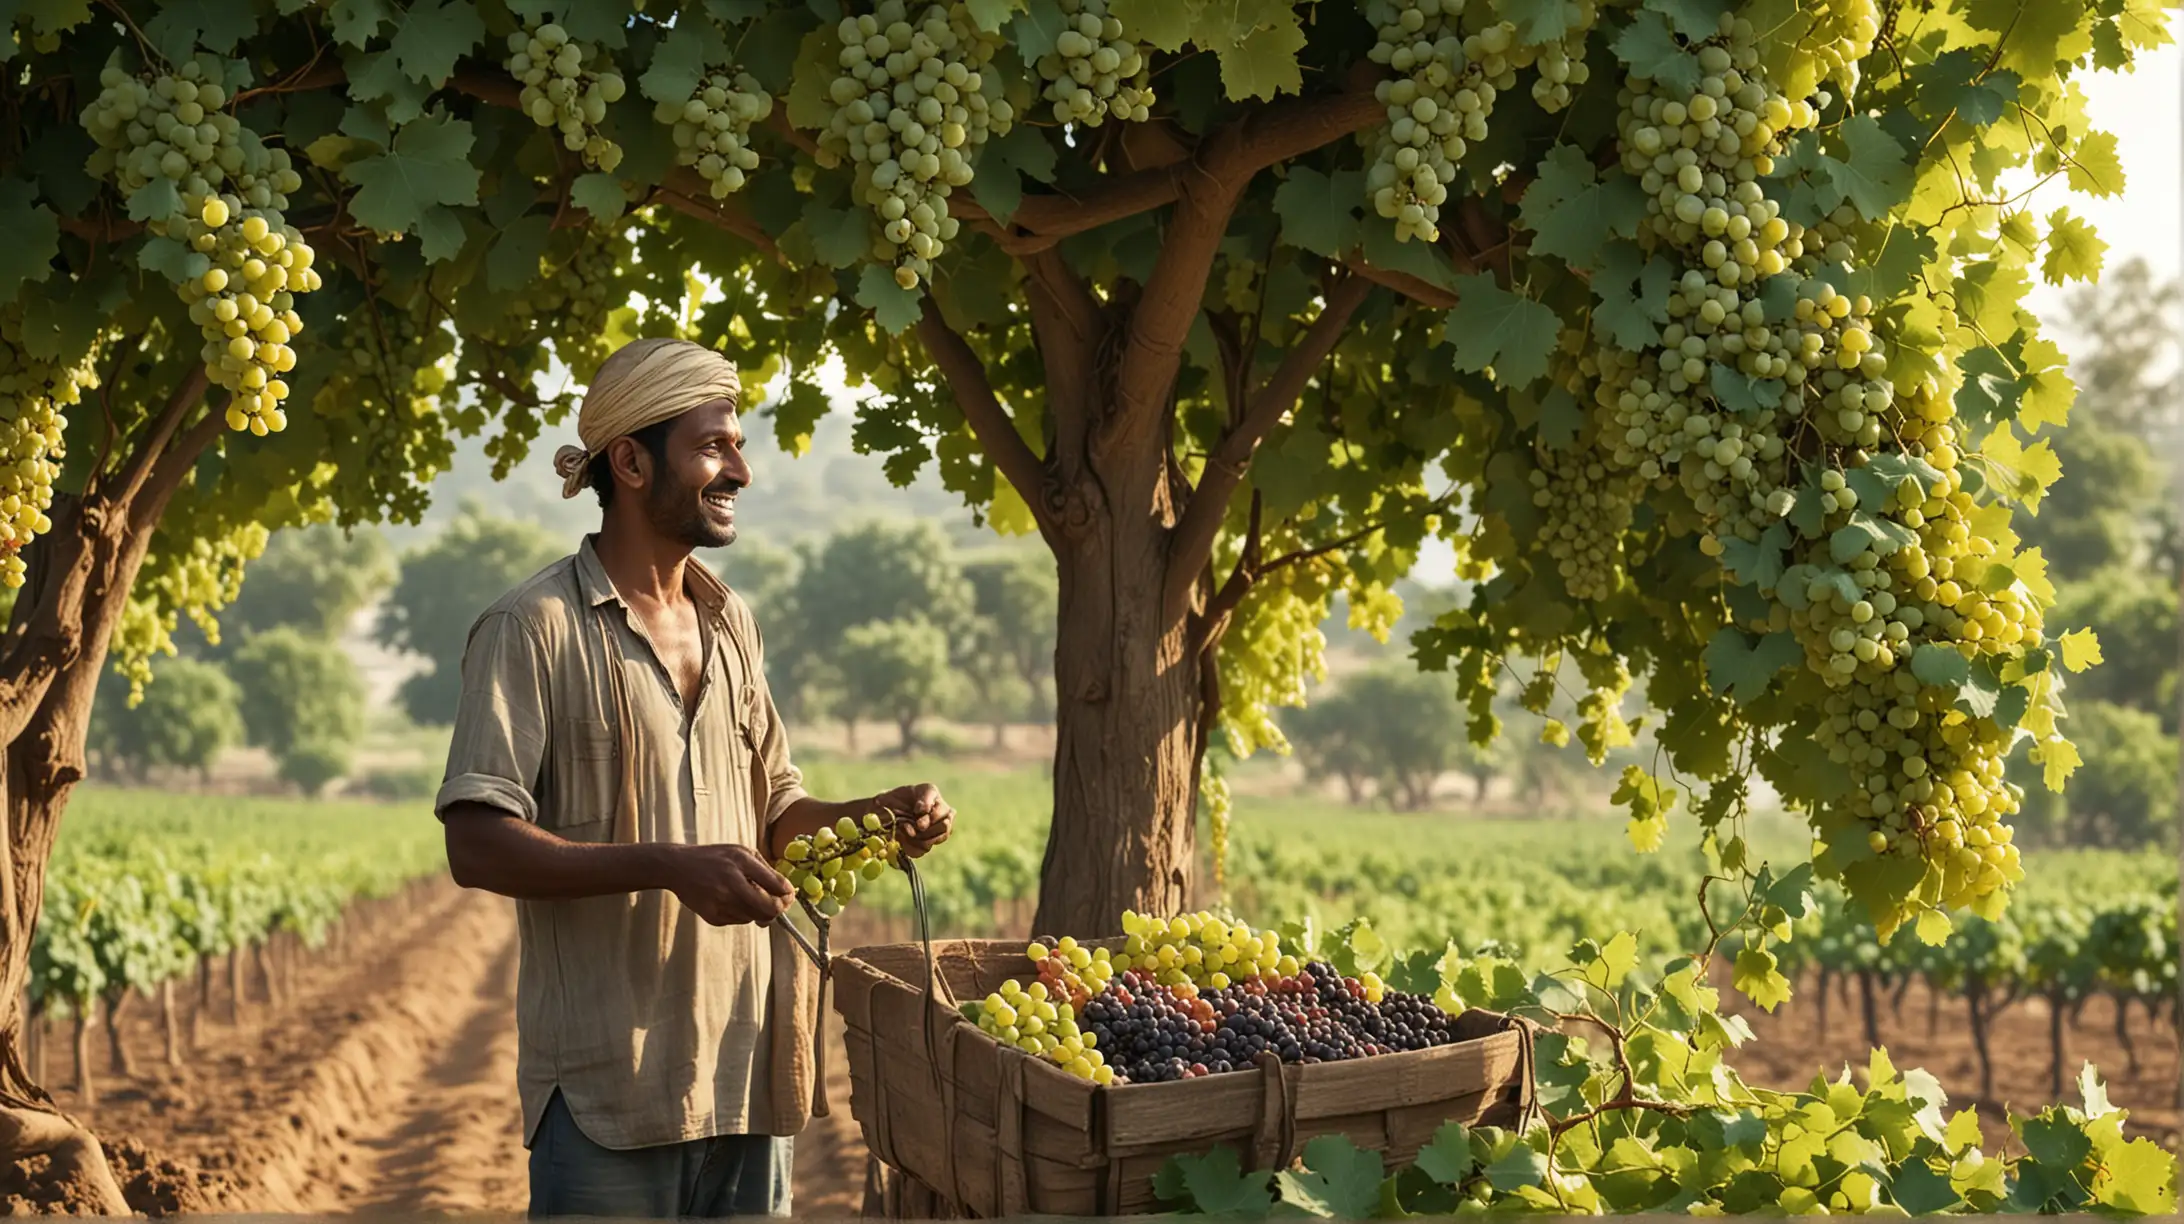 Happy Indian Farmer Cultivating Grapes Organic Farming Success Story